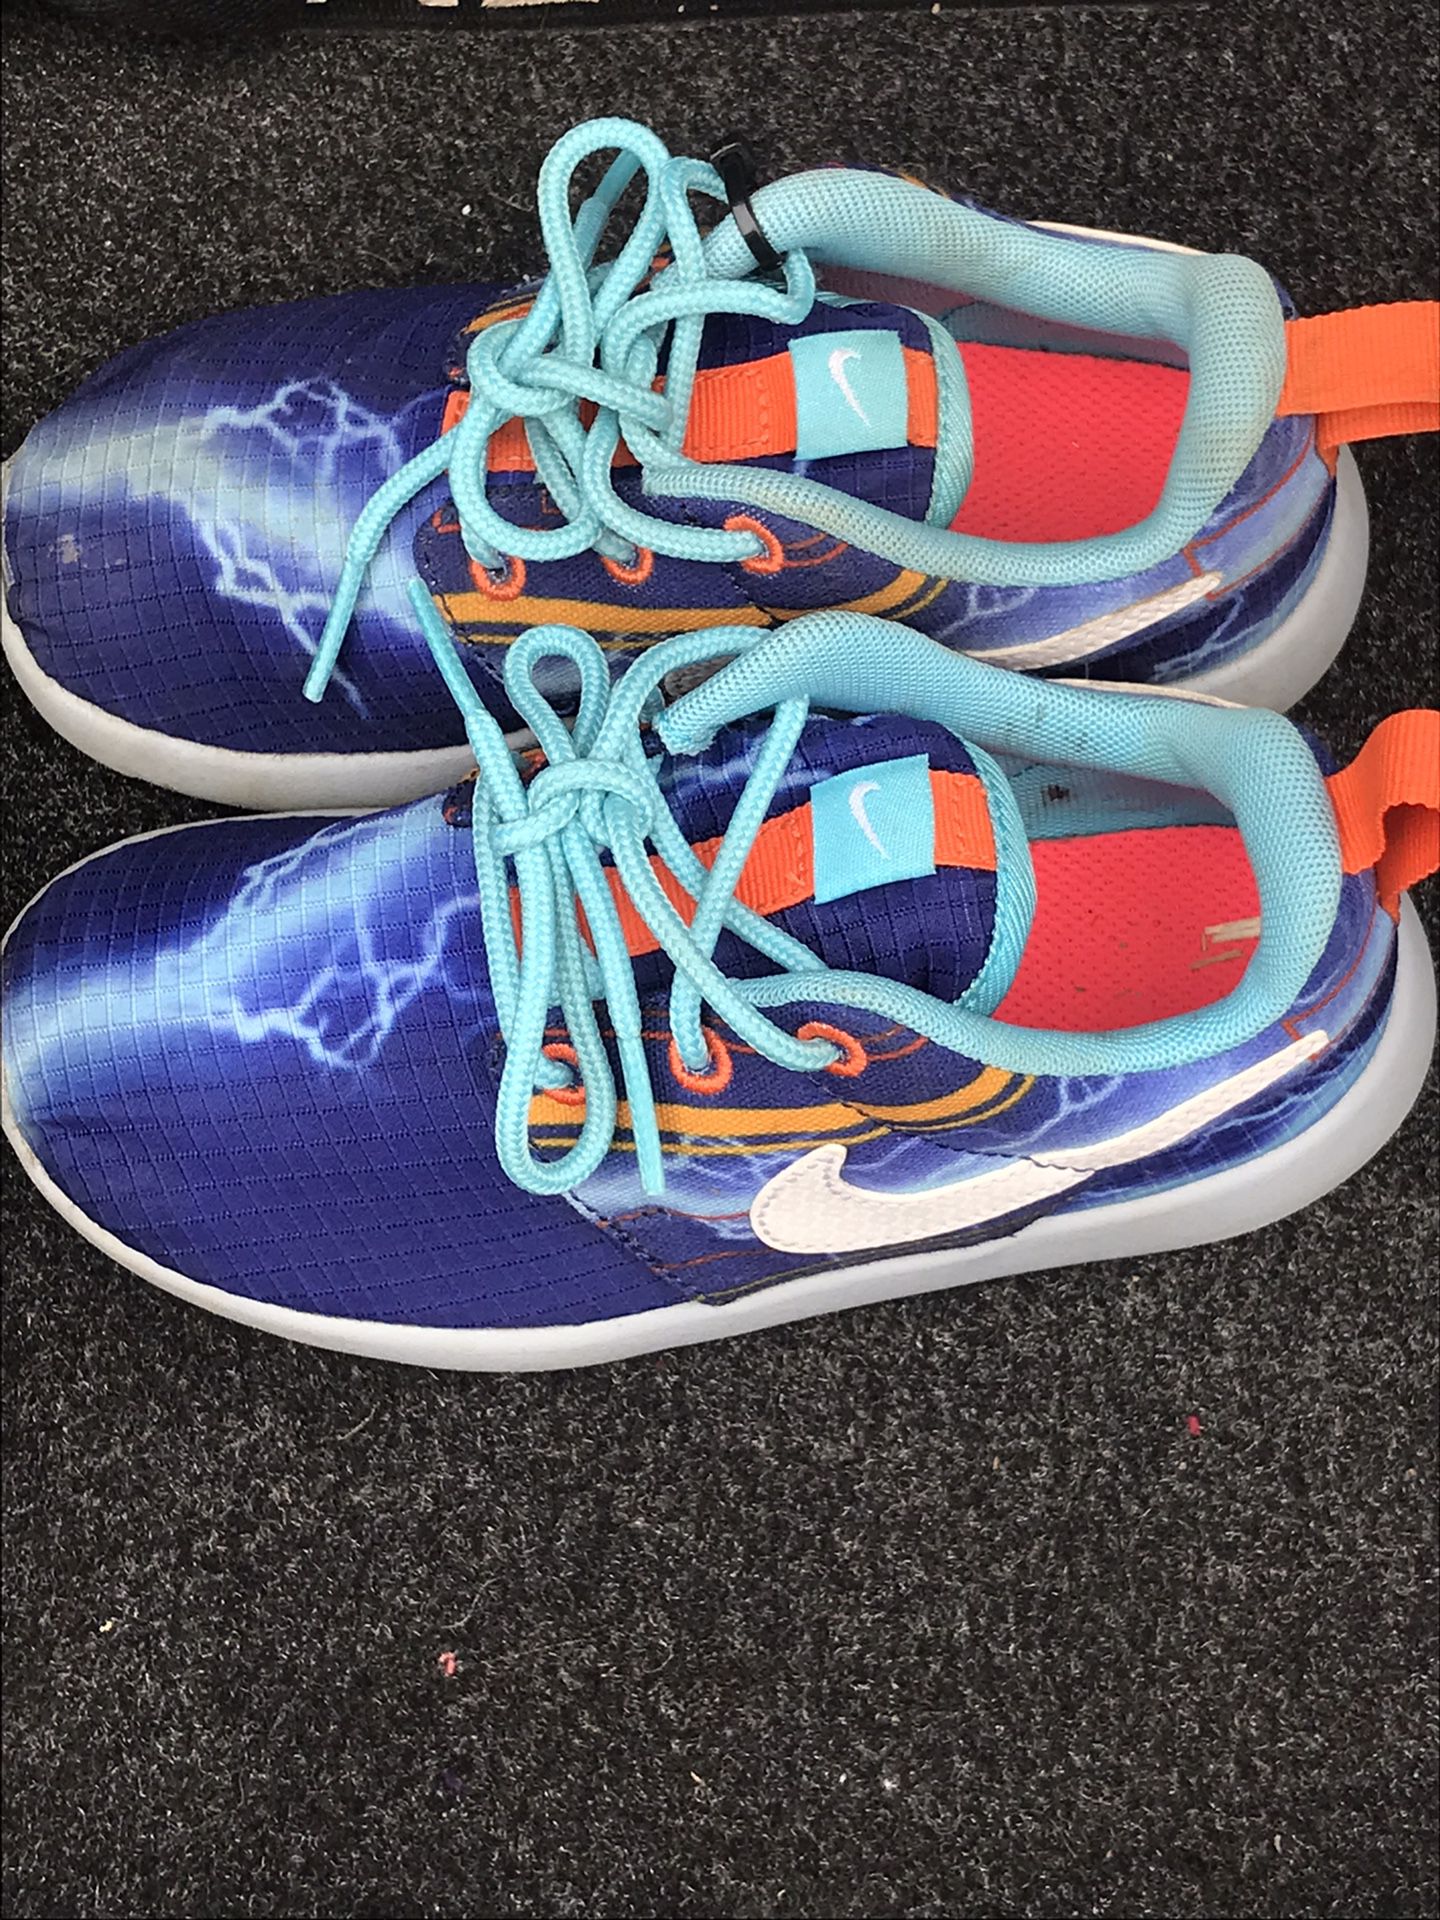 stopverf Ontrouw Mier Nike: Roshe Run Lightning (Size 10.5c) for Sale in Baldwin Hills, CA -  OfferUp